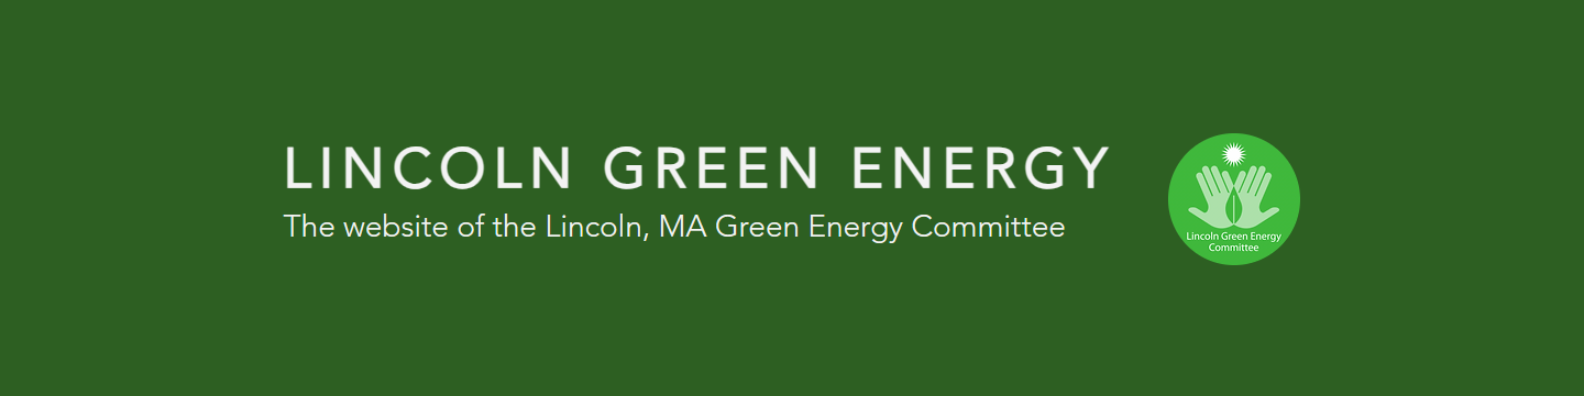 licnoln green energy committee logo